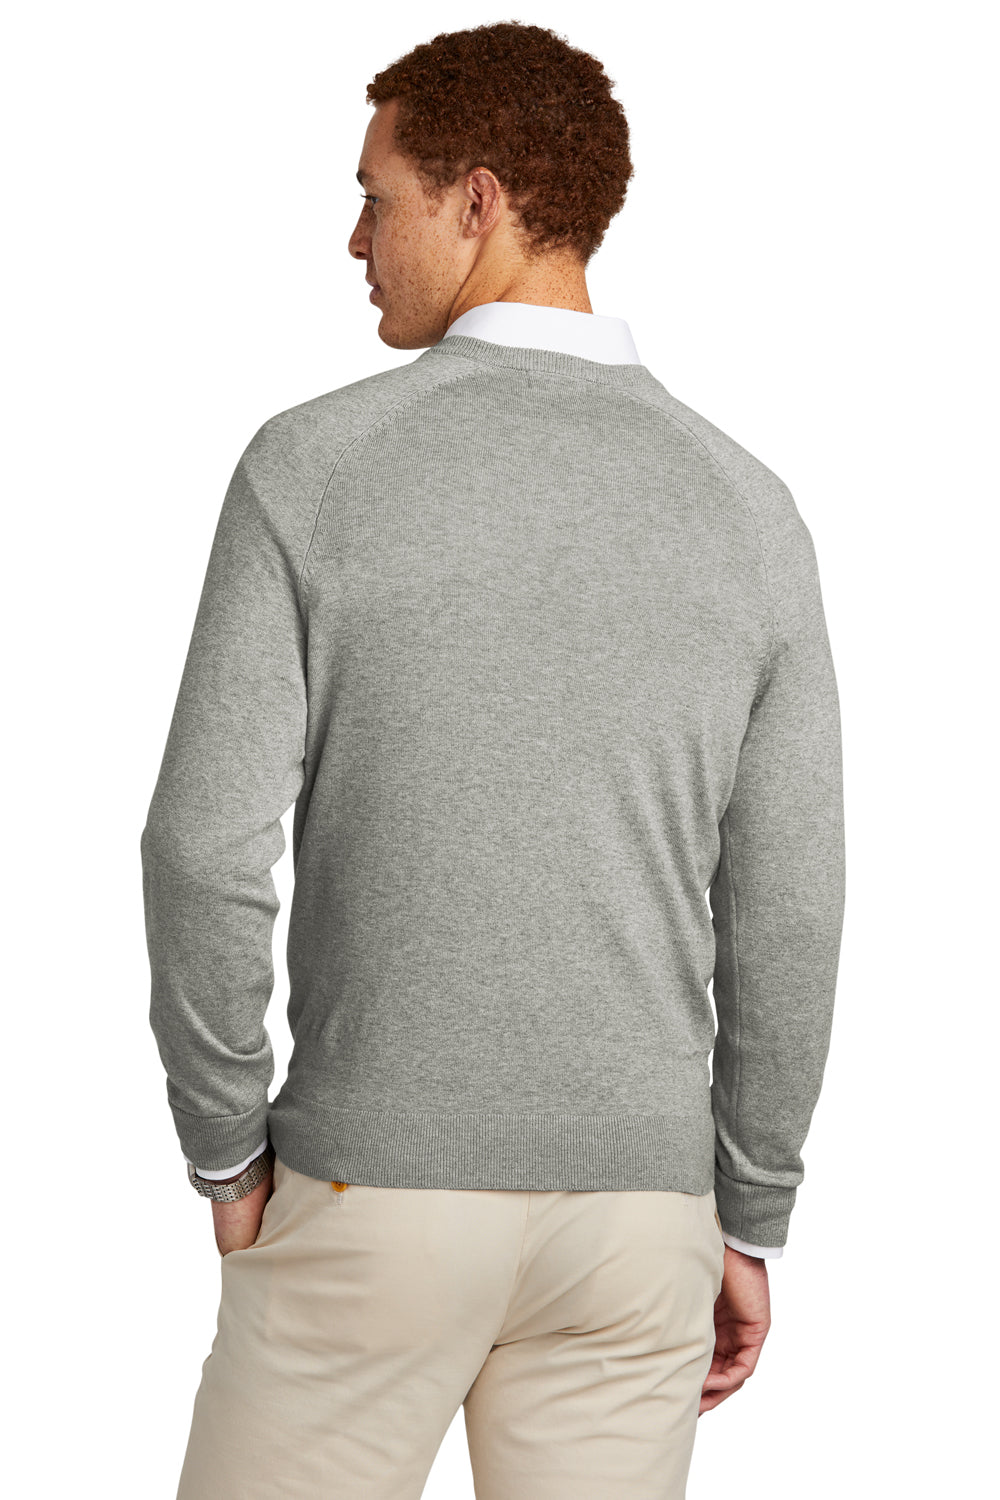 Brooks Brothers Mens Long Sleeve V-Neck Sweater Heather Light Shadow Grey Model Back